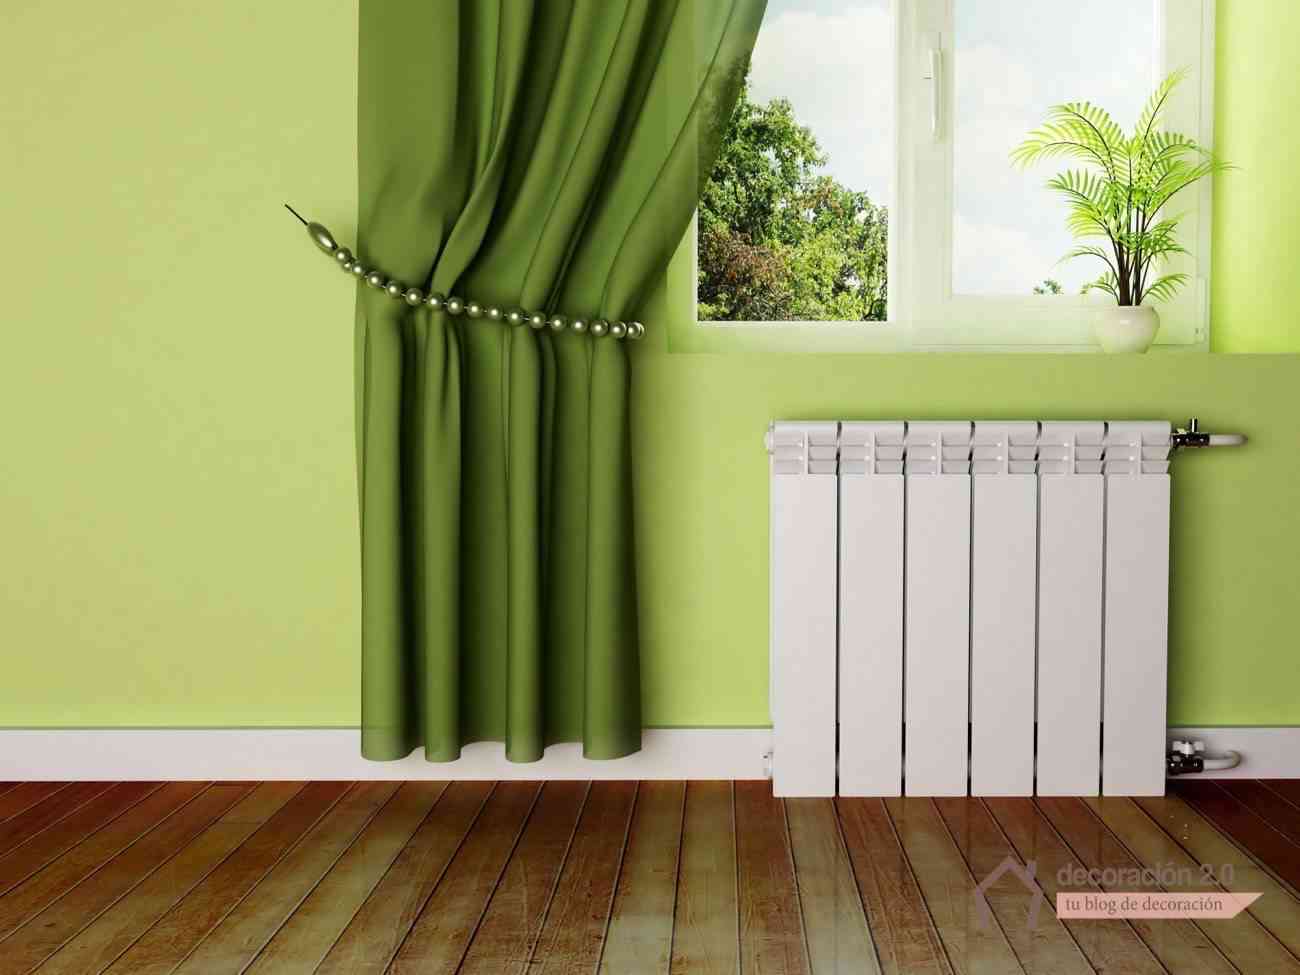 interior design scene with a radiator